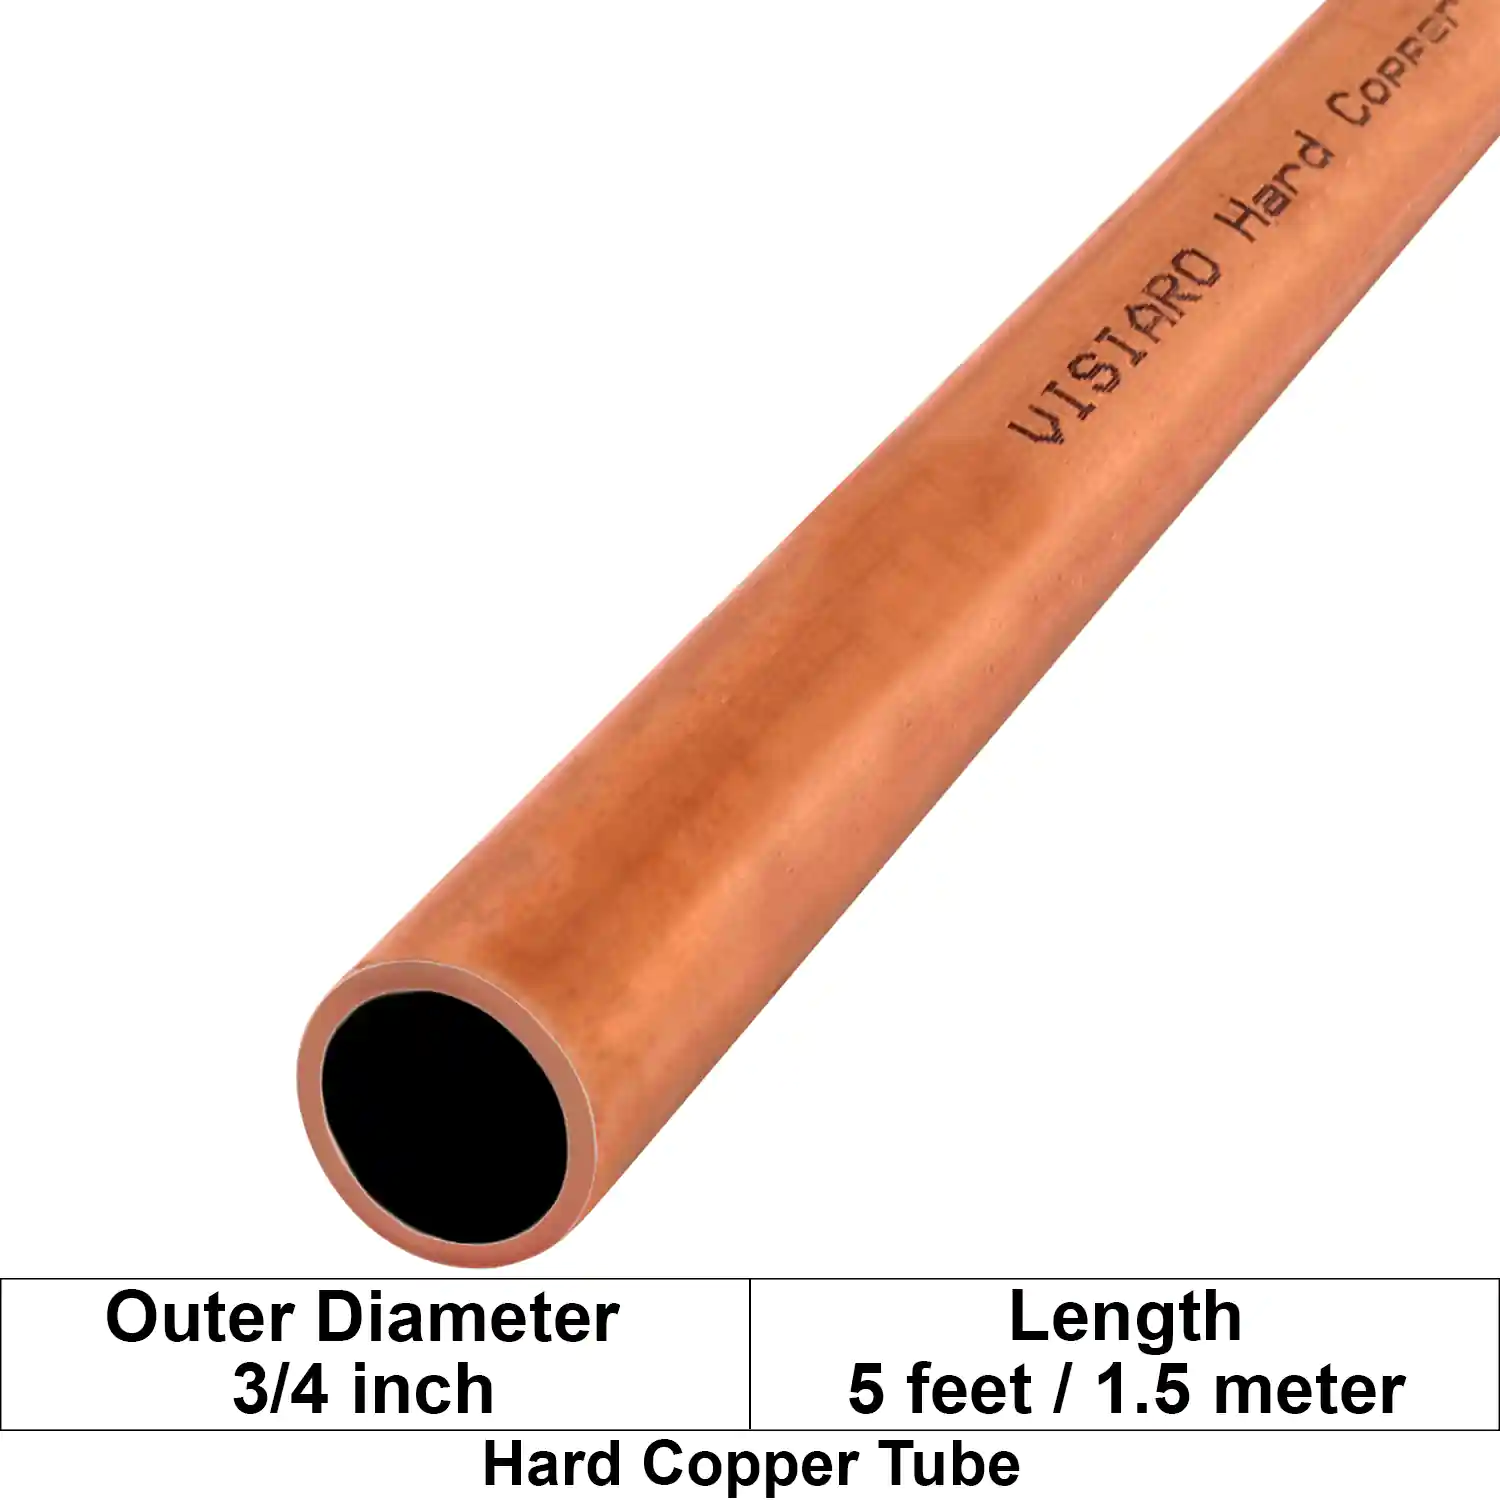 Visiaro Hard Copper Tube 5 feet long Outer Diameter - 3/4 inch